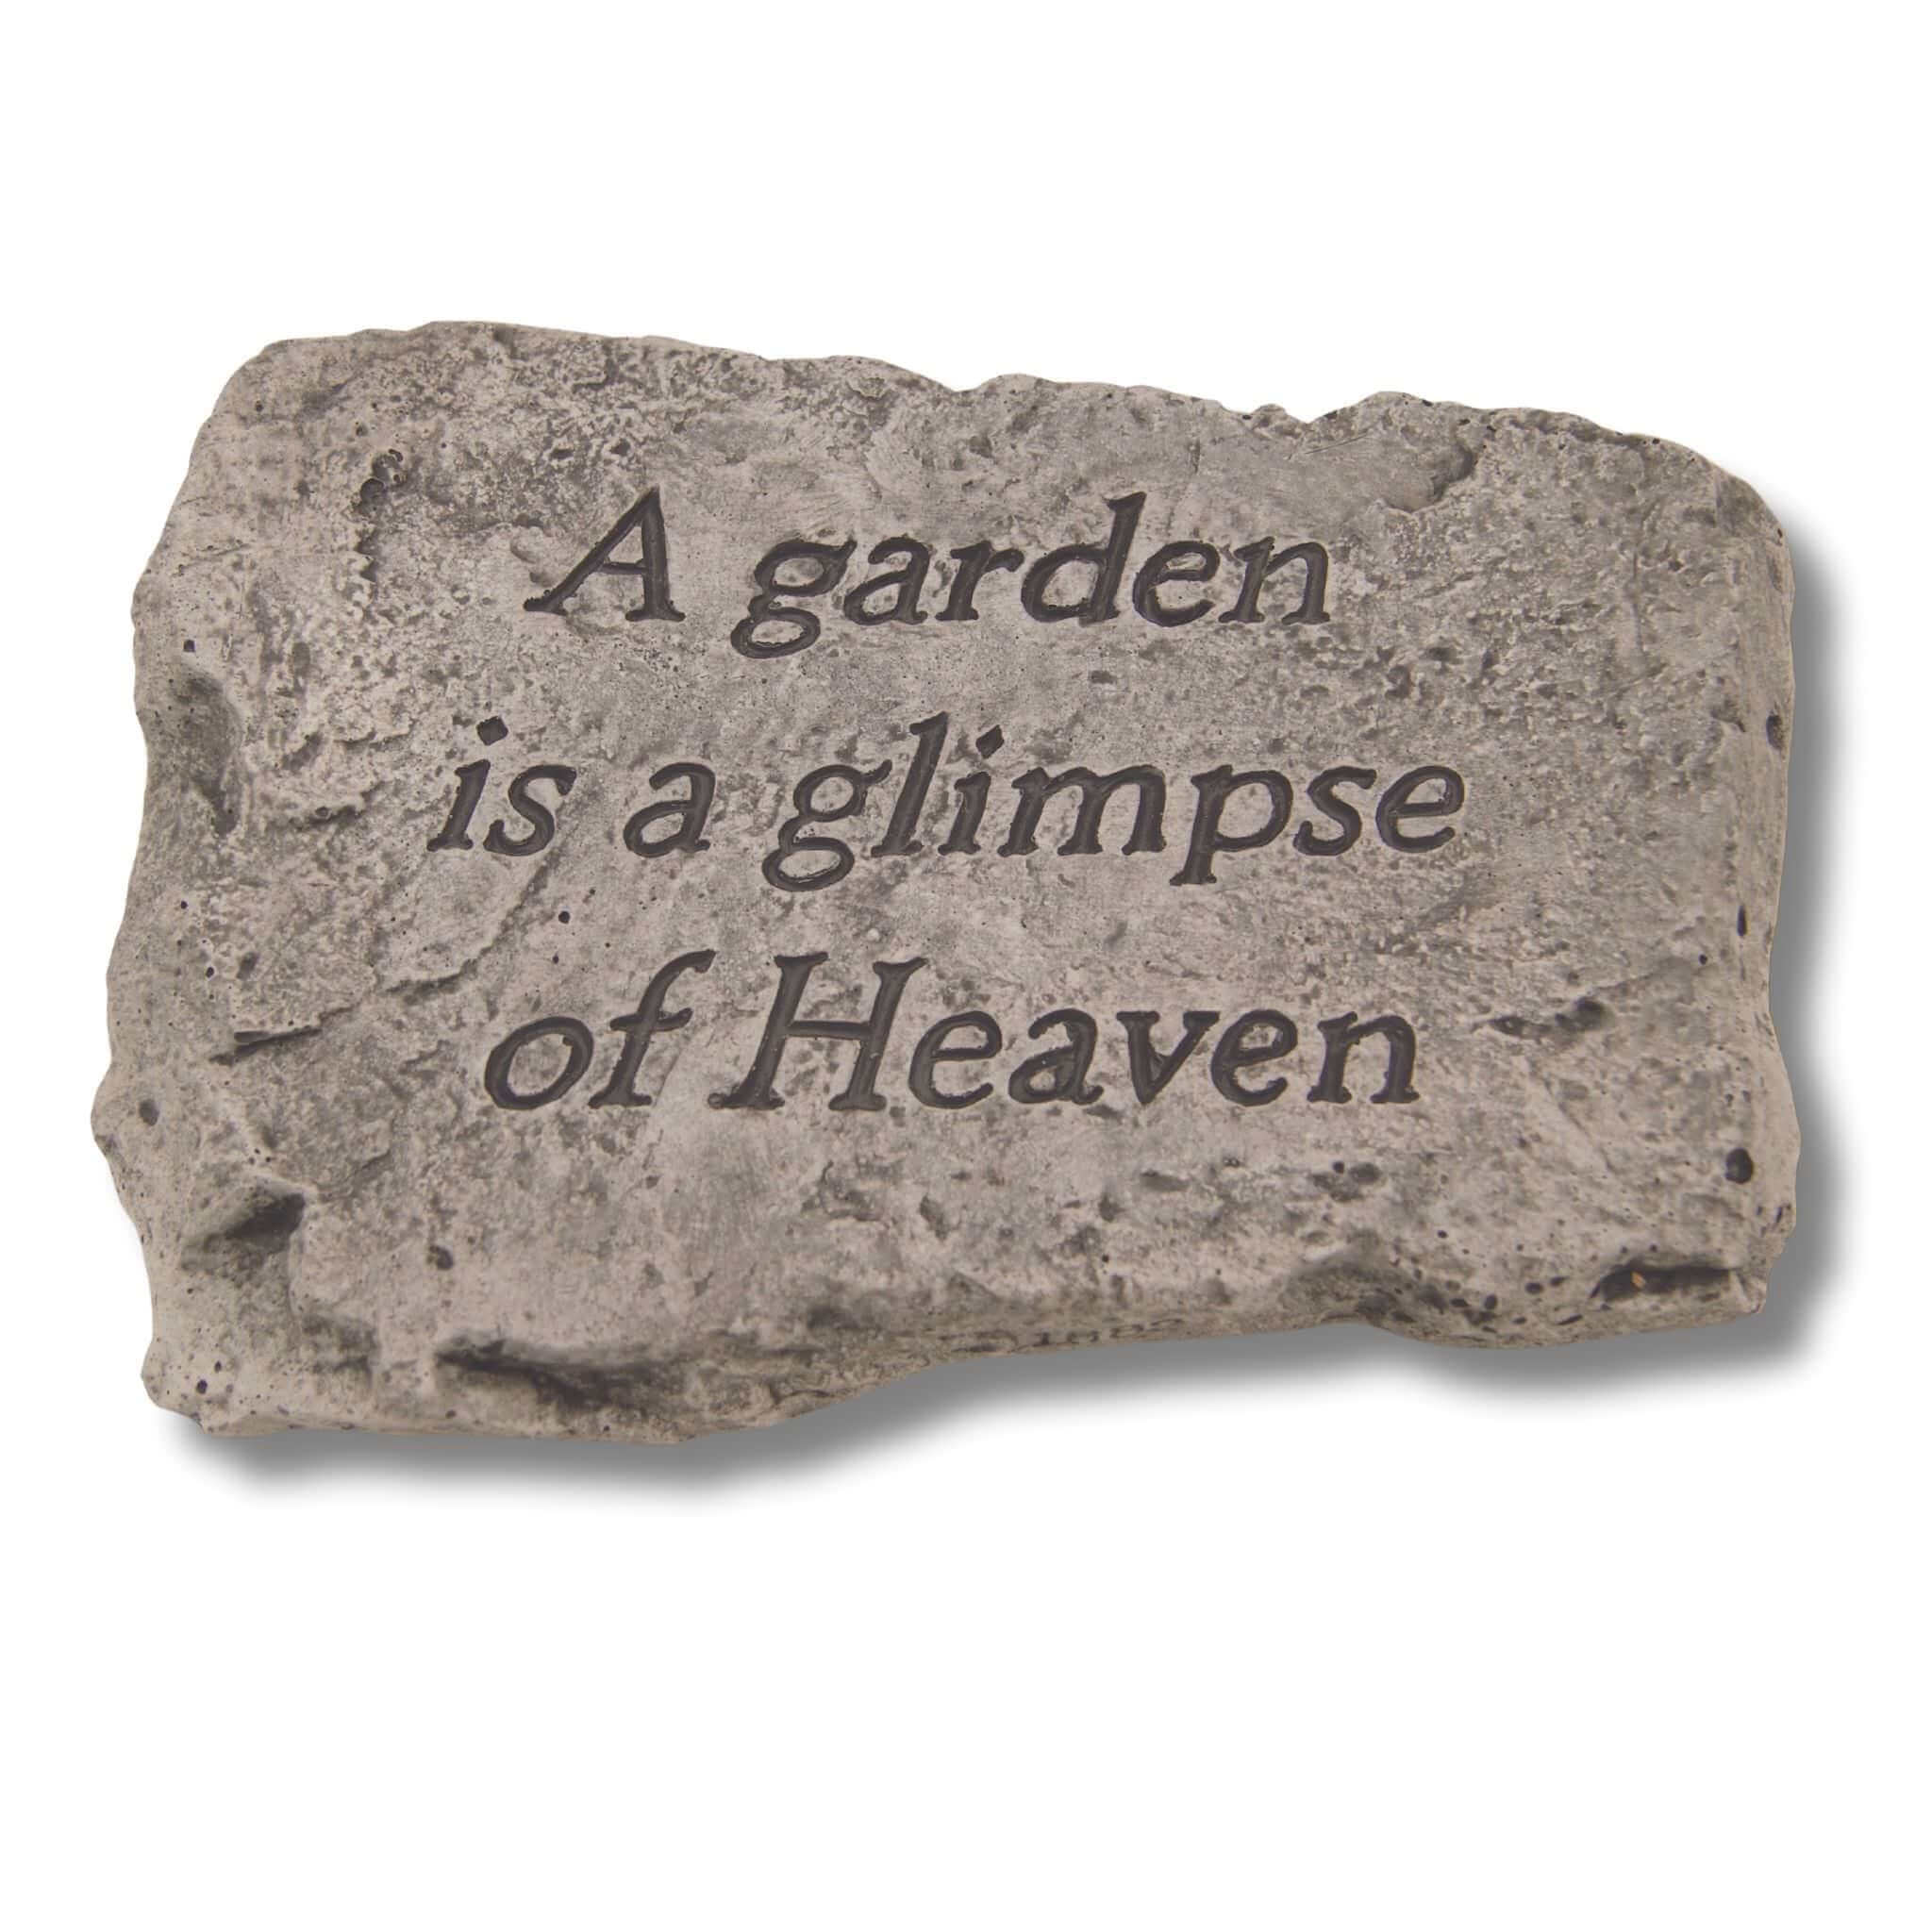 Glimpse of Heaven Concrete Garden Greeting Stone - Massarellis #1882